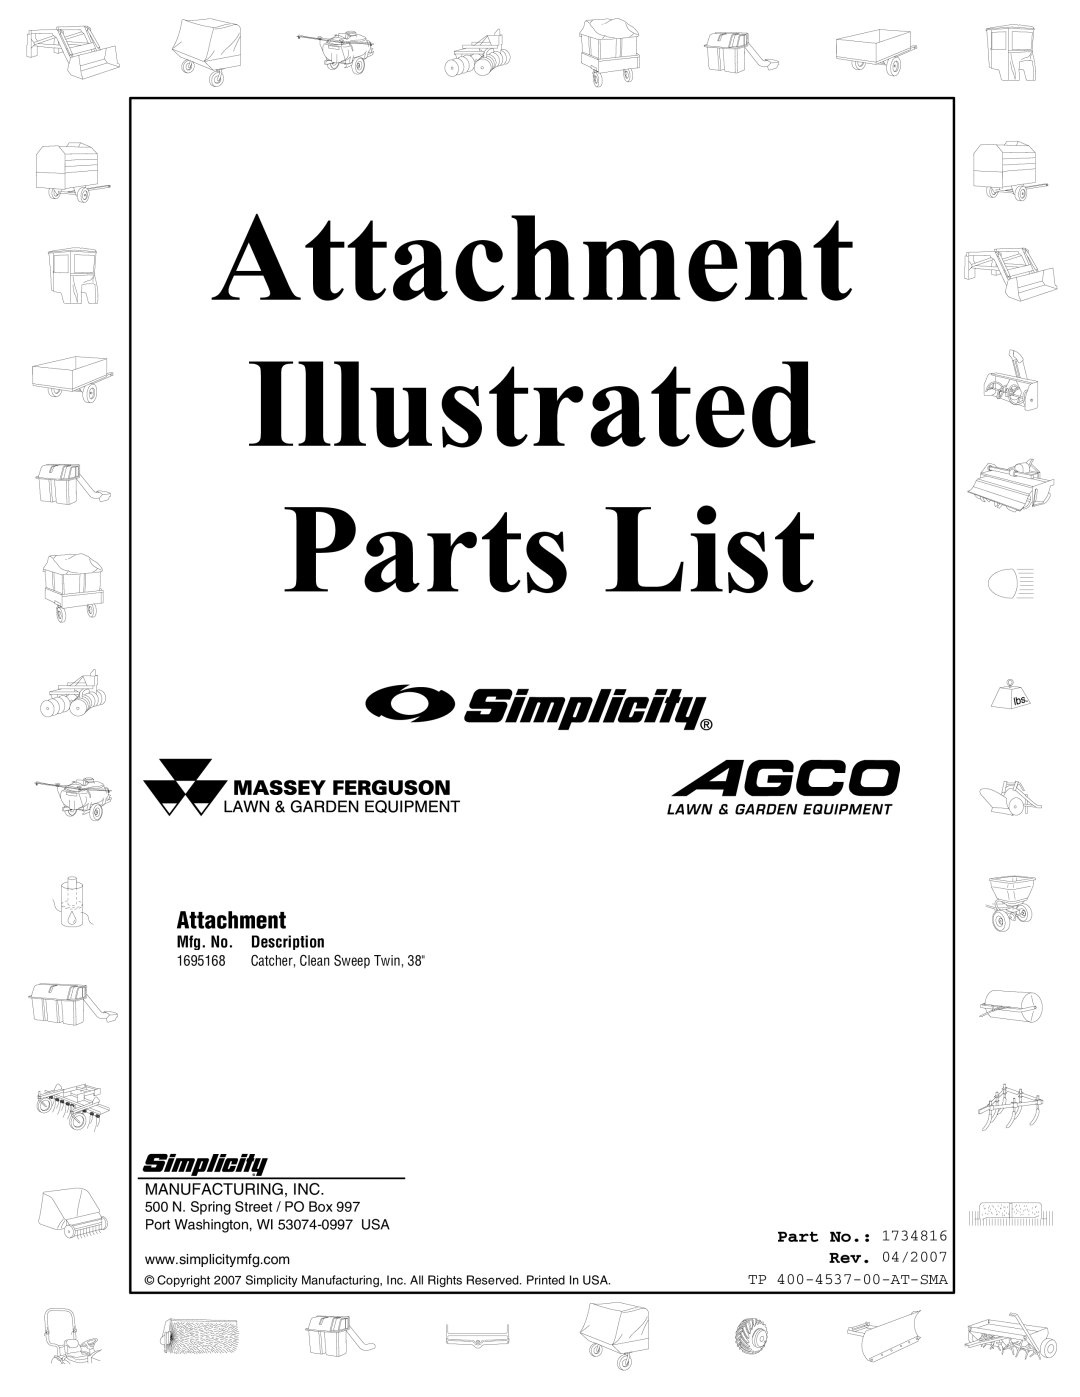 Simplicity 1695168 manual Attachment, Mfg. No, Description, Illustrated, Parts List, Rev. 04/2007, TP 400-4537-00-AT-SMA 